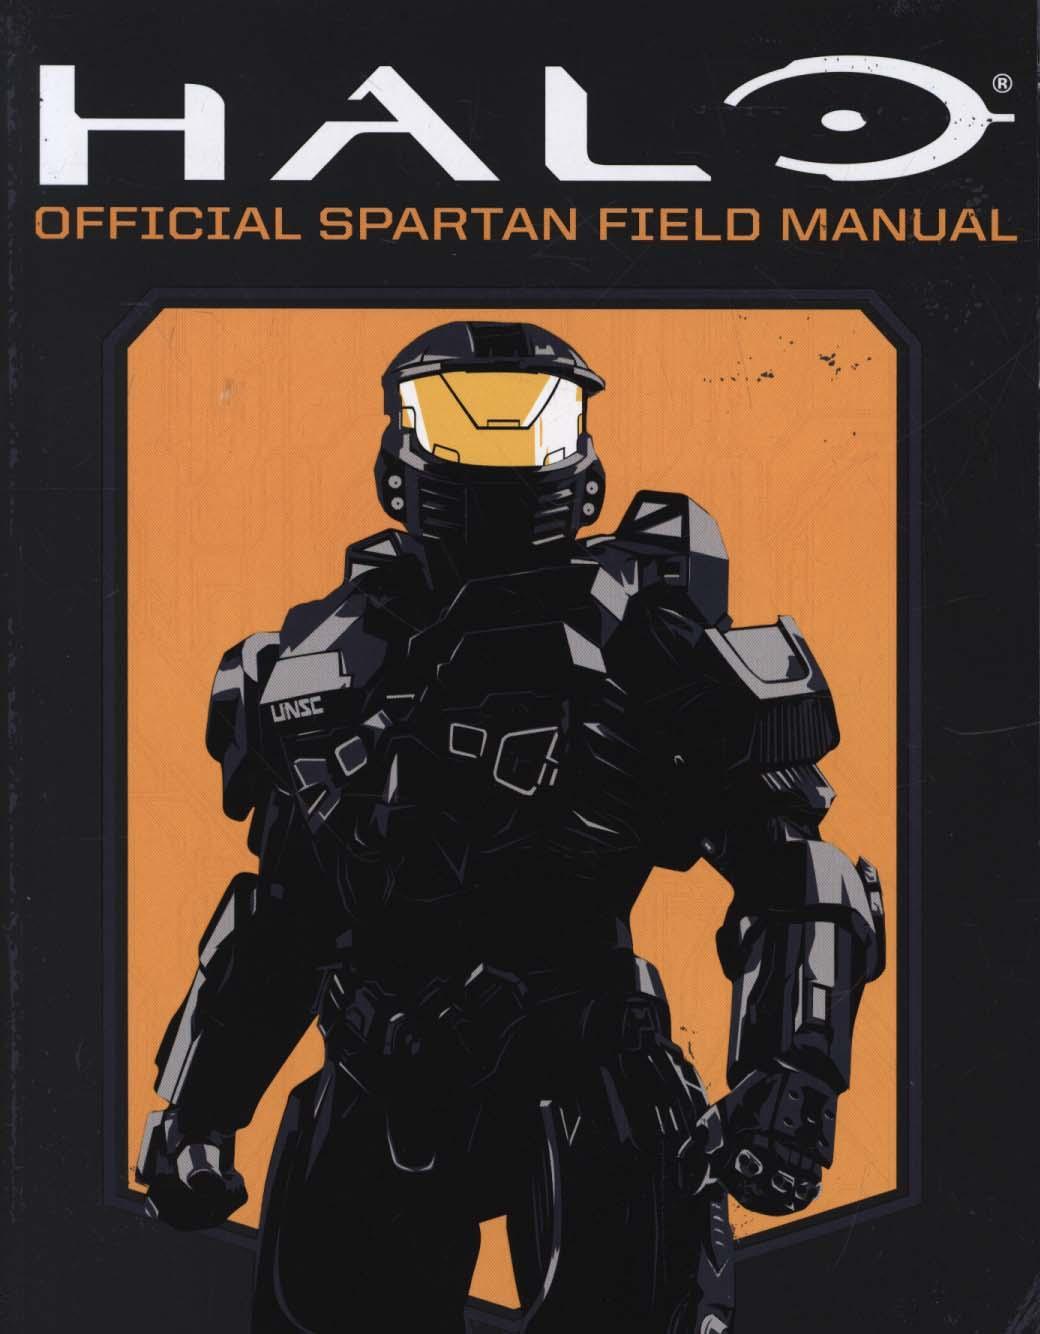 Official Spartan Field Manual